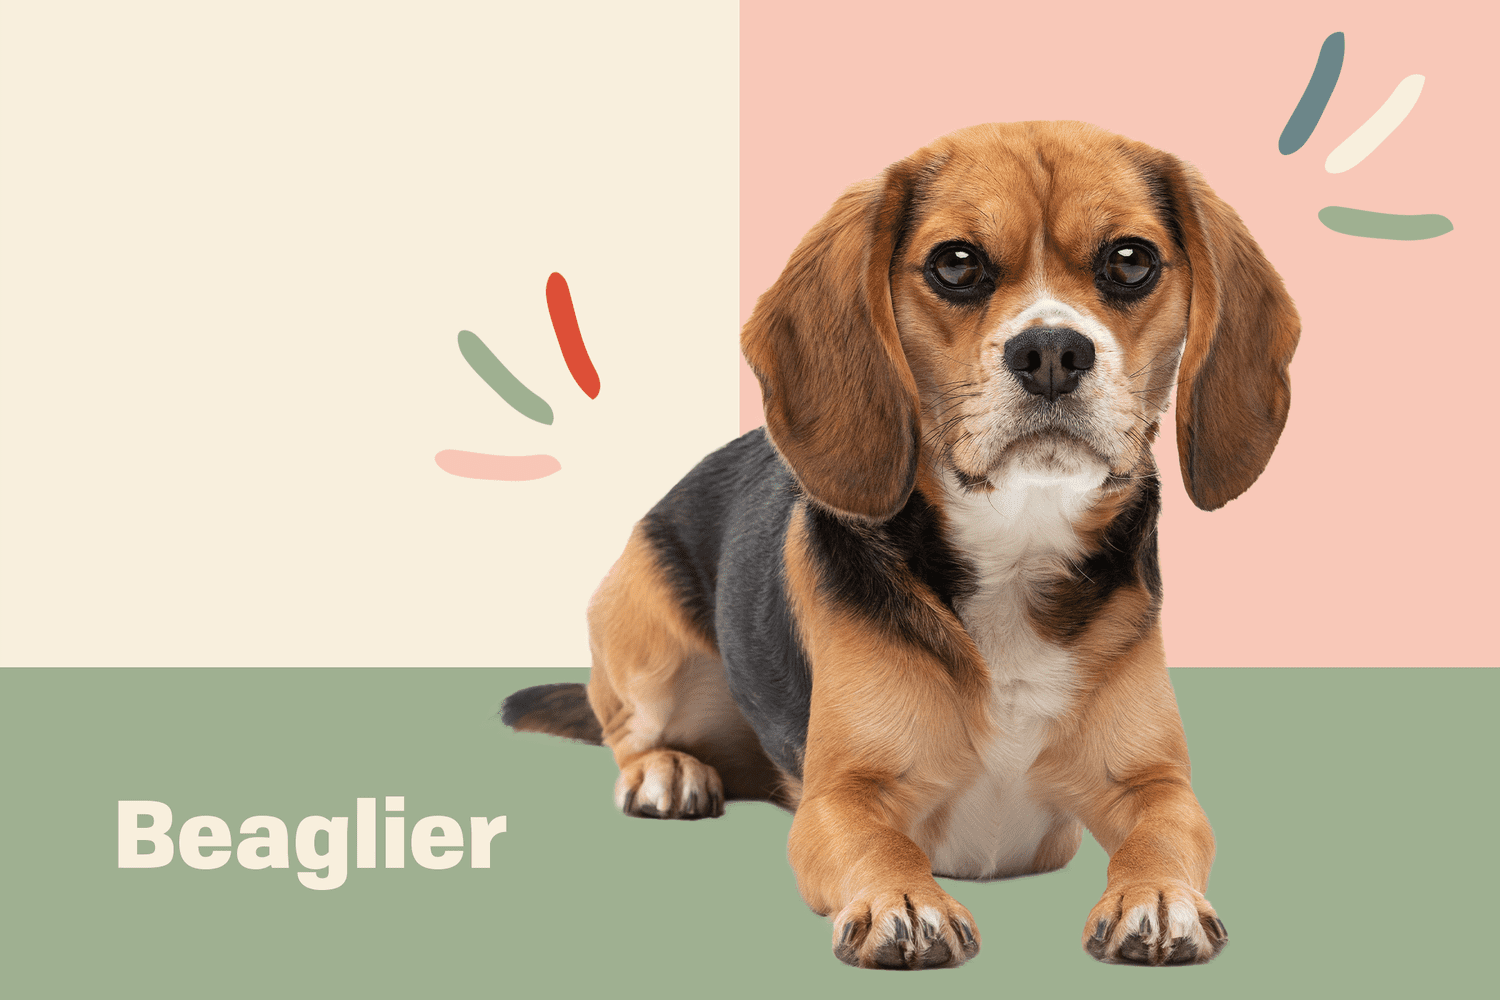 Beaglier dog breed profile treatment